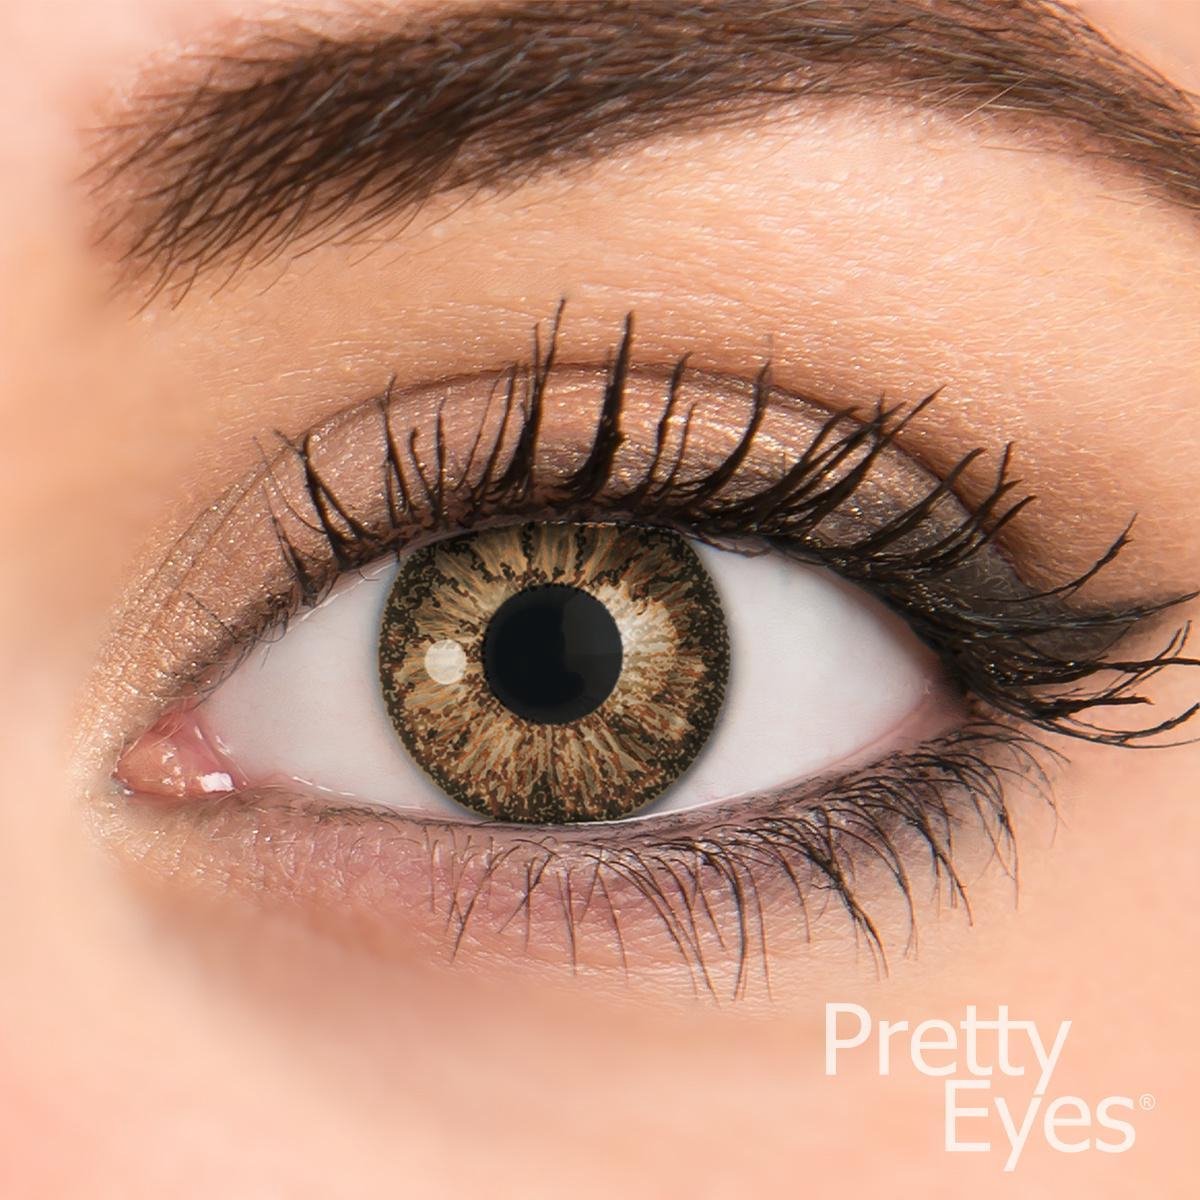 Pretty Eyes kleurlenzen bruin - 4 stuks - daglenzen